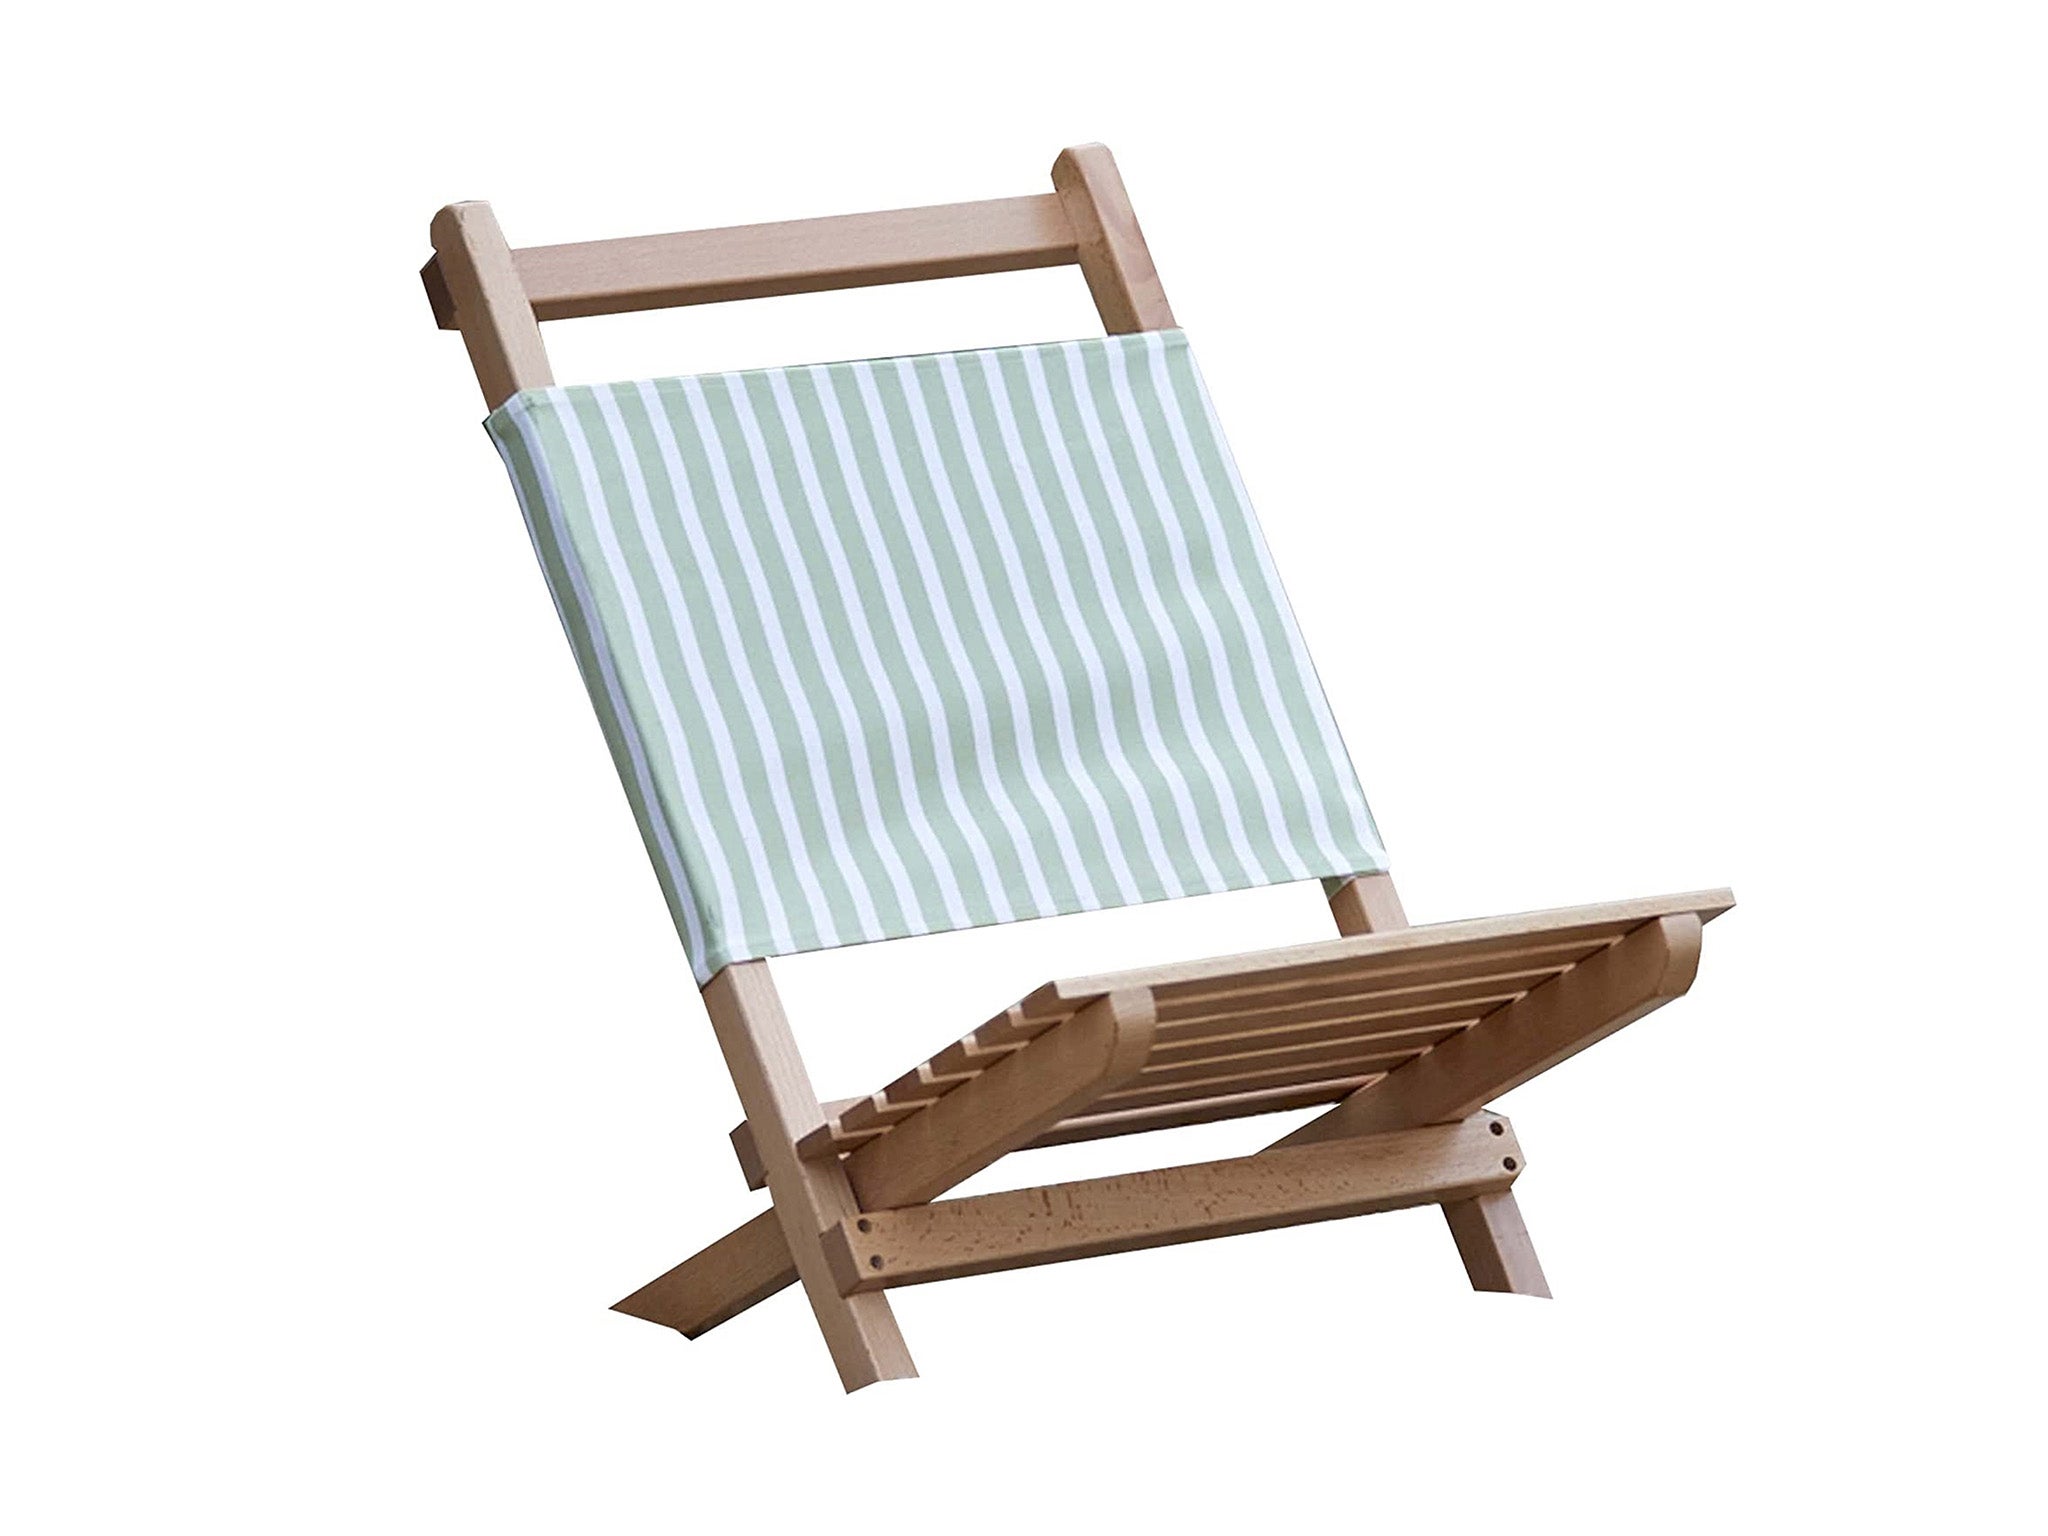 Gardeneque striped wooden sun lounger